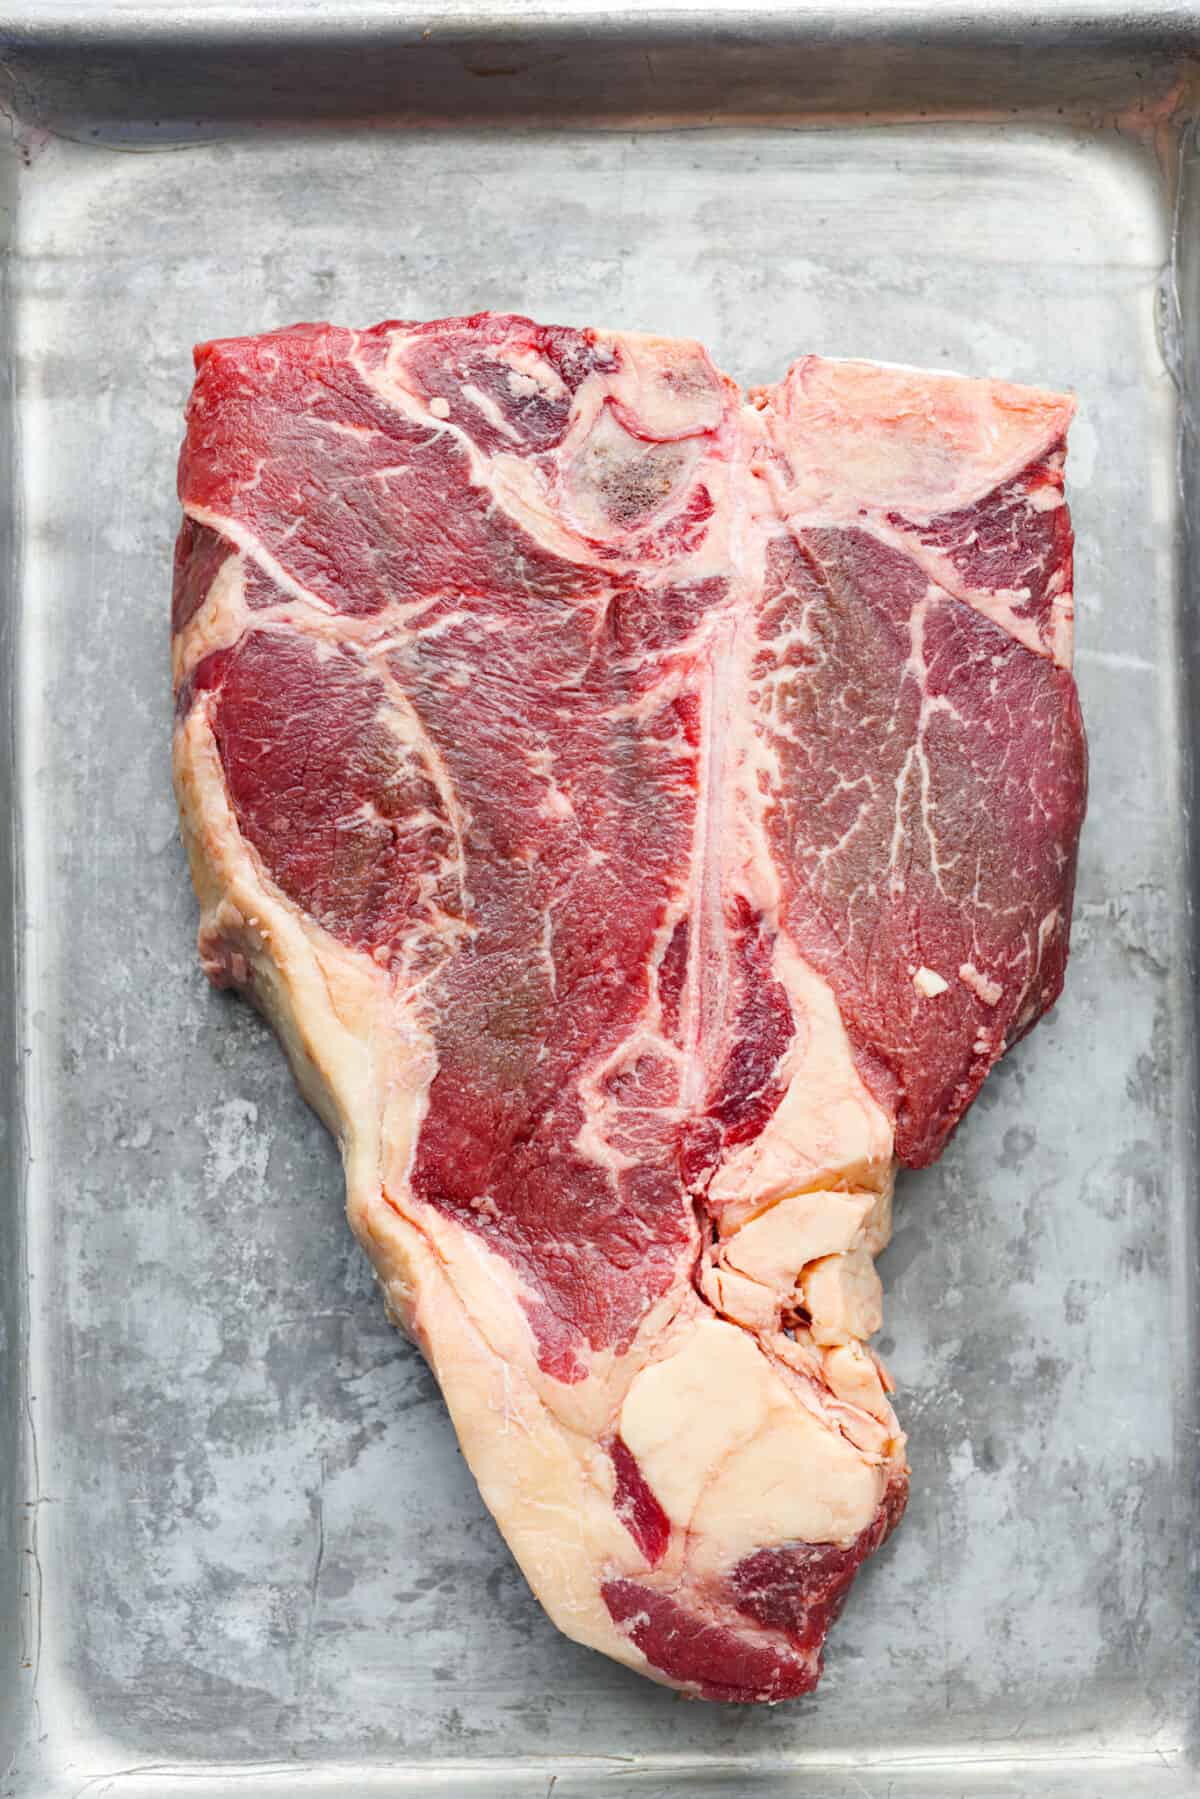 Top-down view of a raw tbone steak.